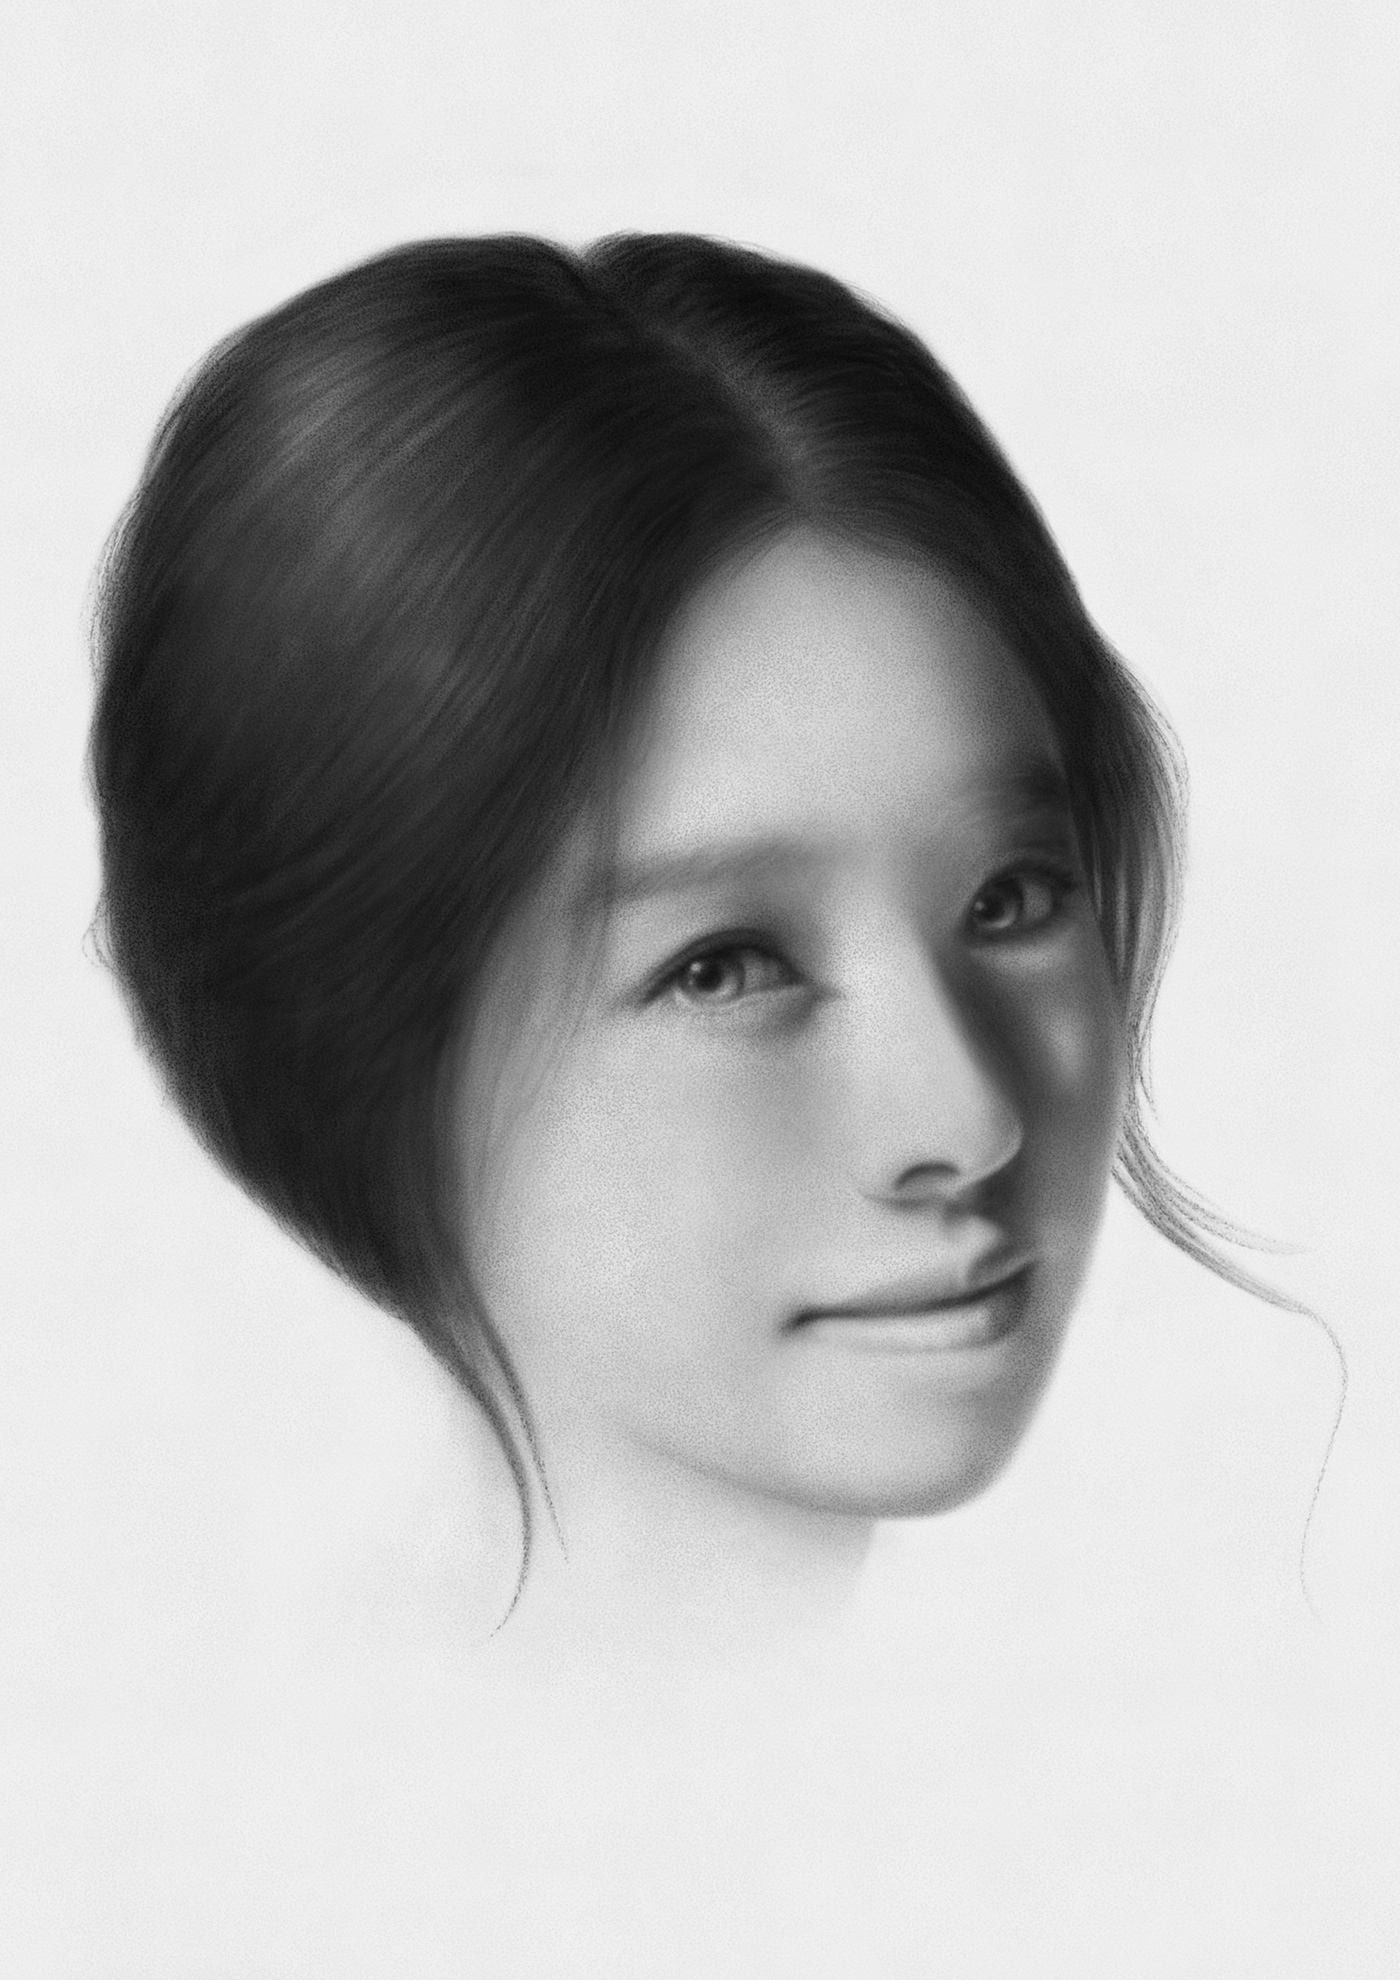 asian beauty black and white human face photorealism portrait Realism realistic woman illustration woman portrait